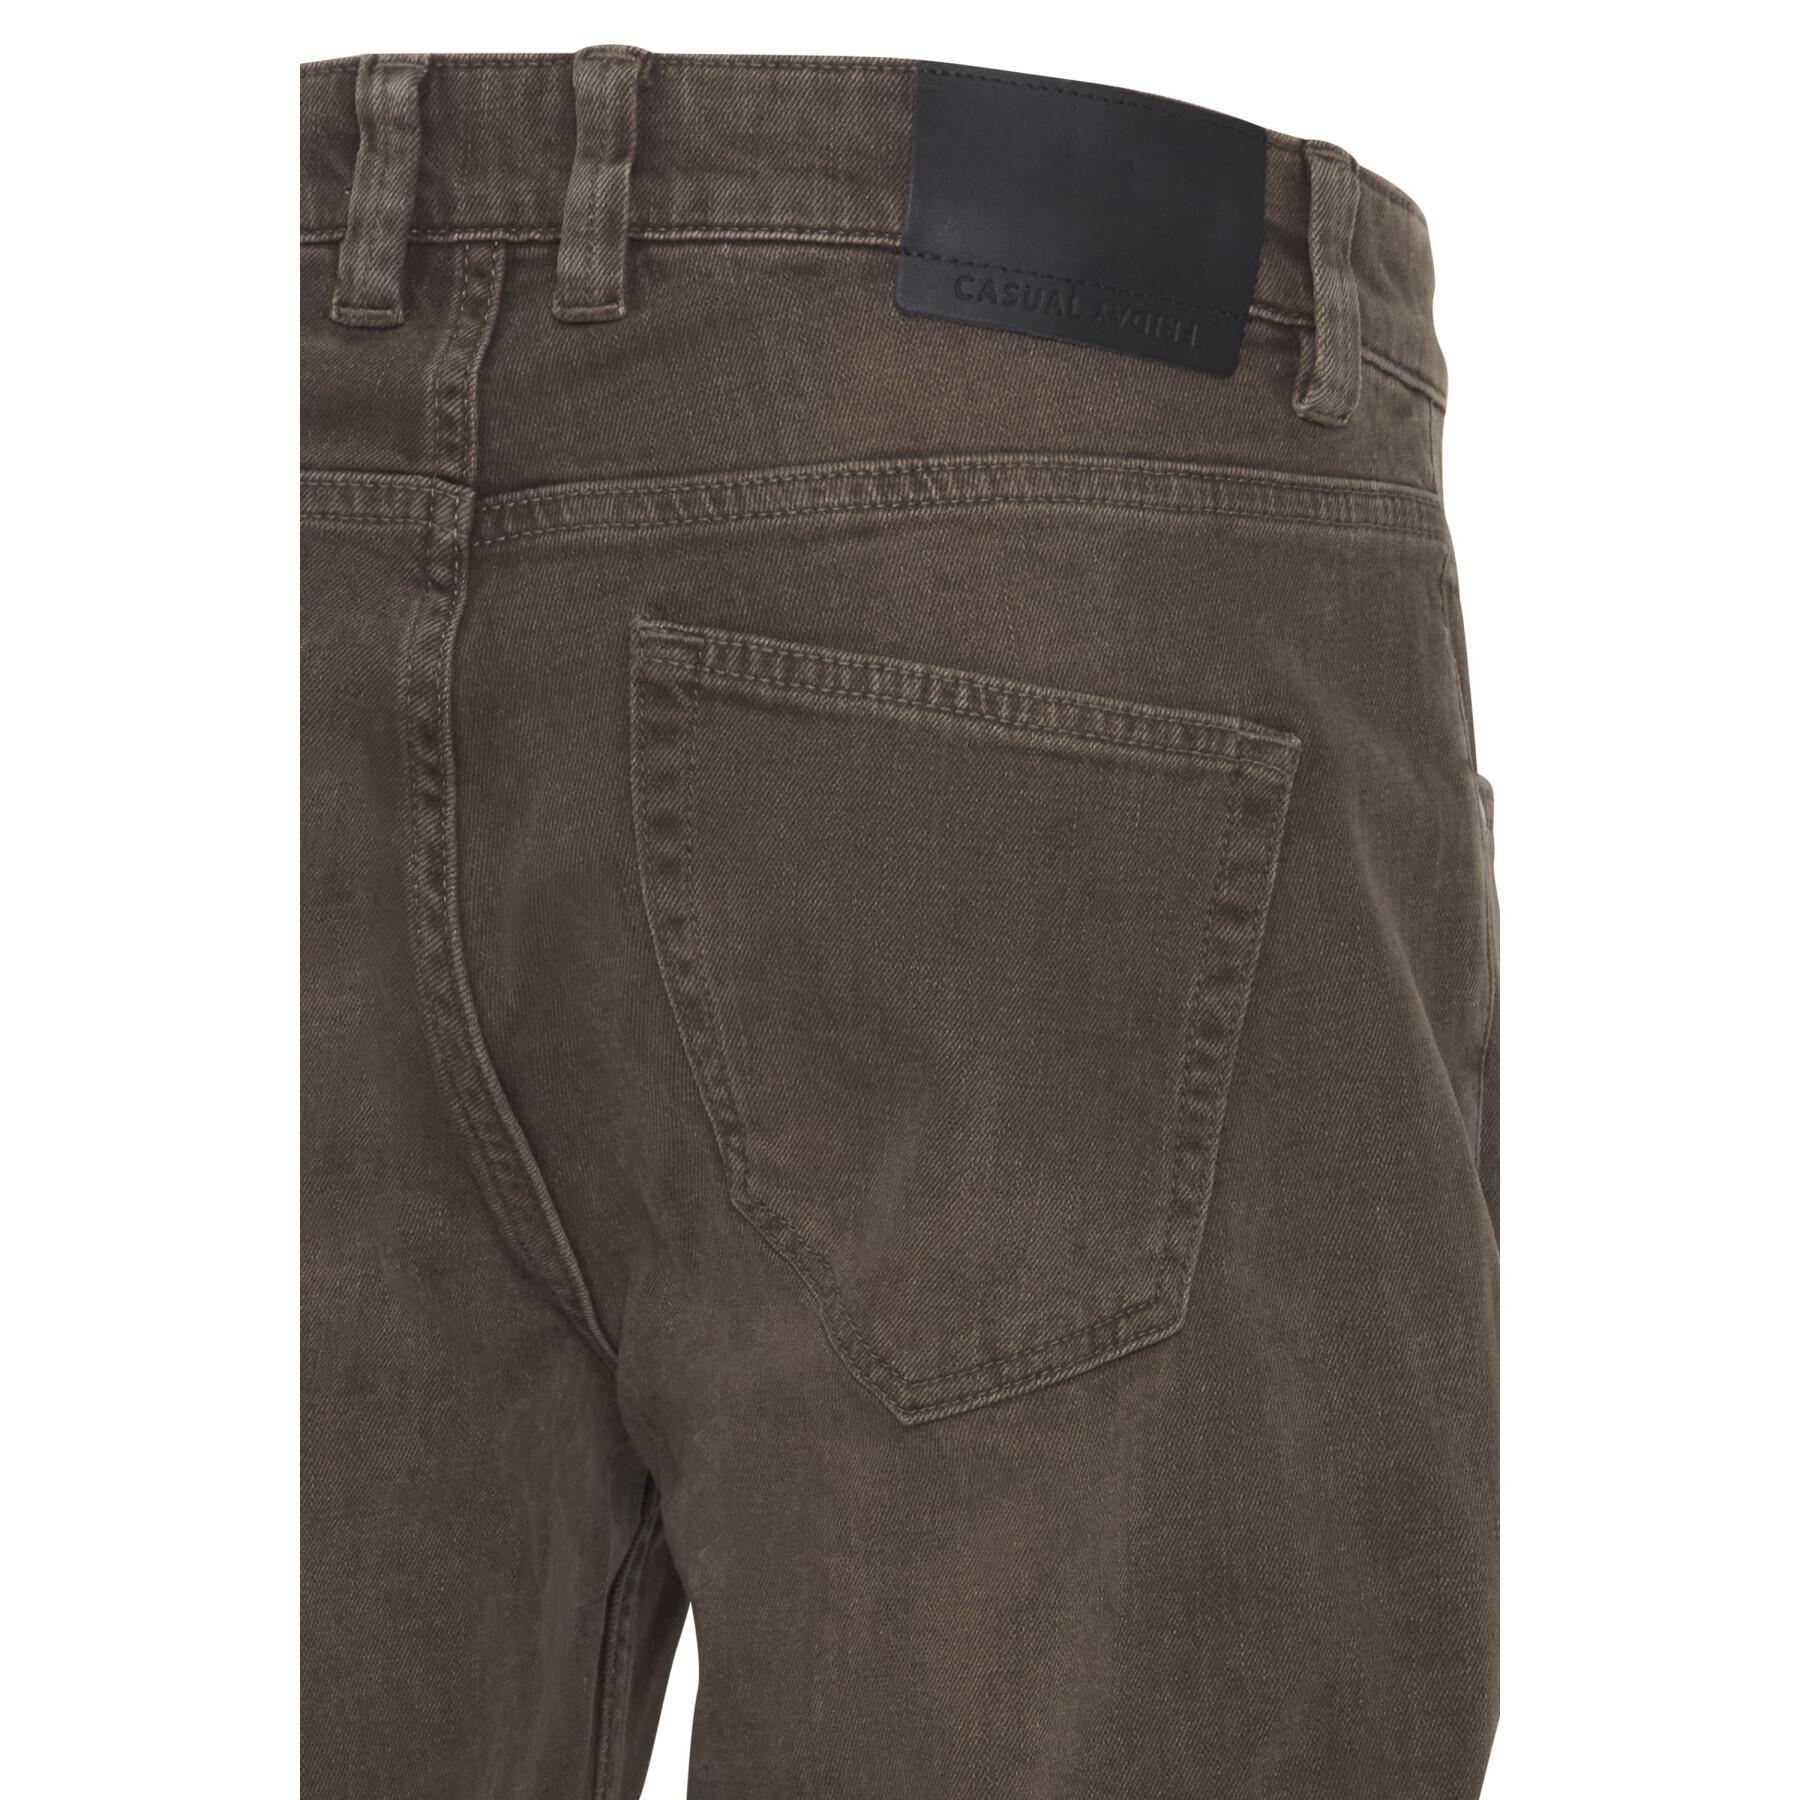 5-pocket jeans Casual Friday Karup 0102